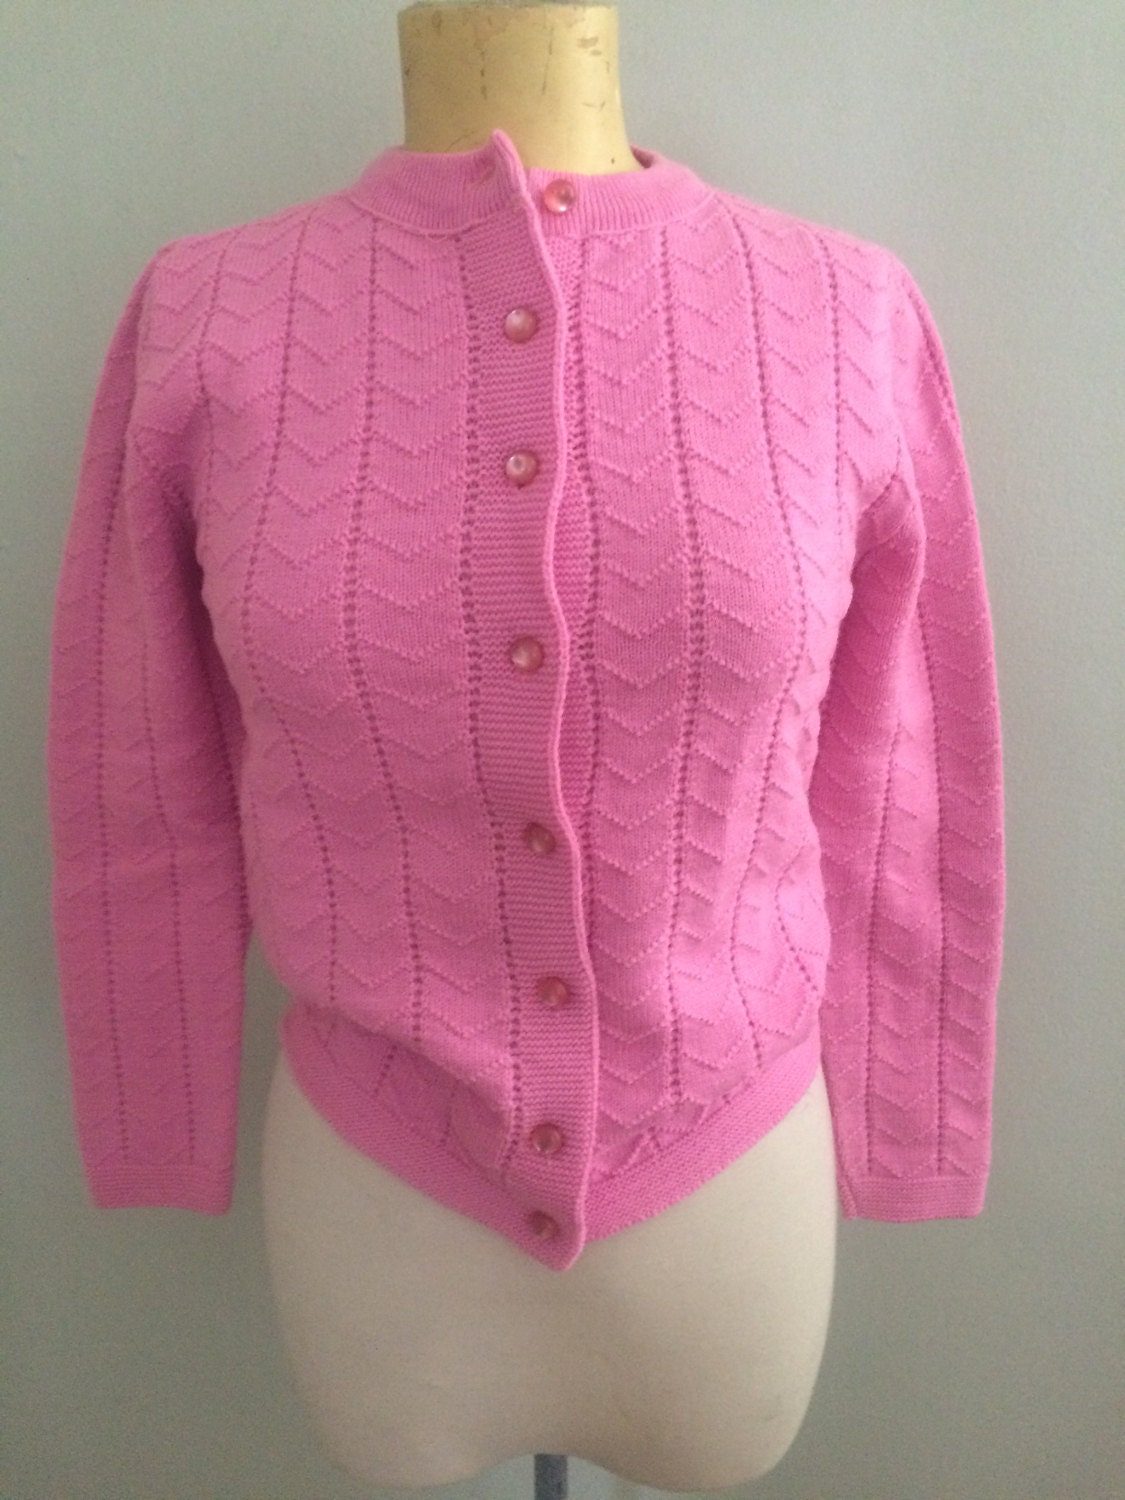 1950s Pink Acrylic Knit Cardigan Sweater by Bernice Size M/L